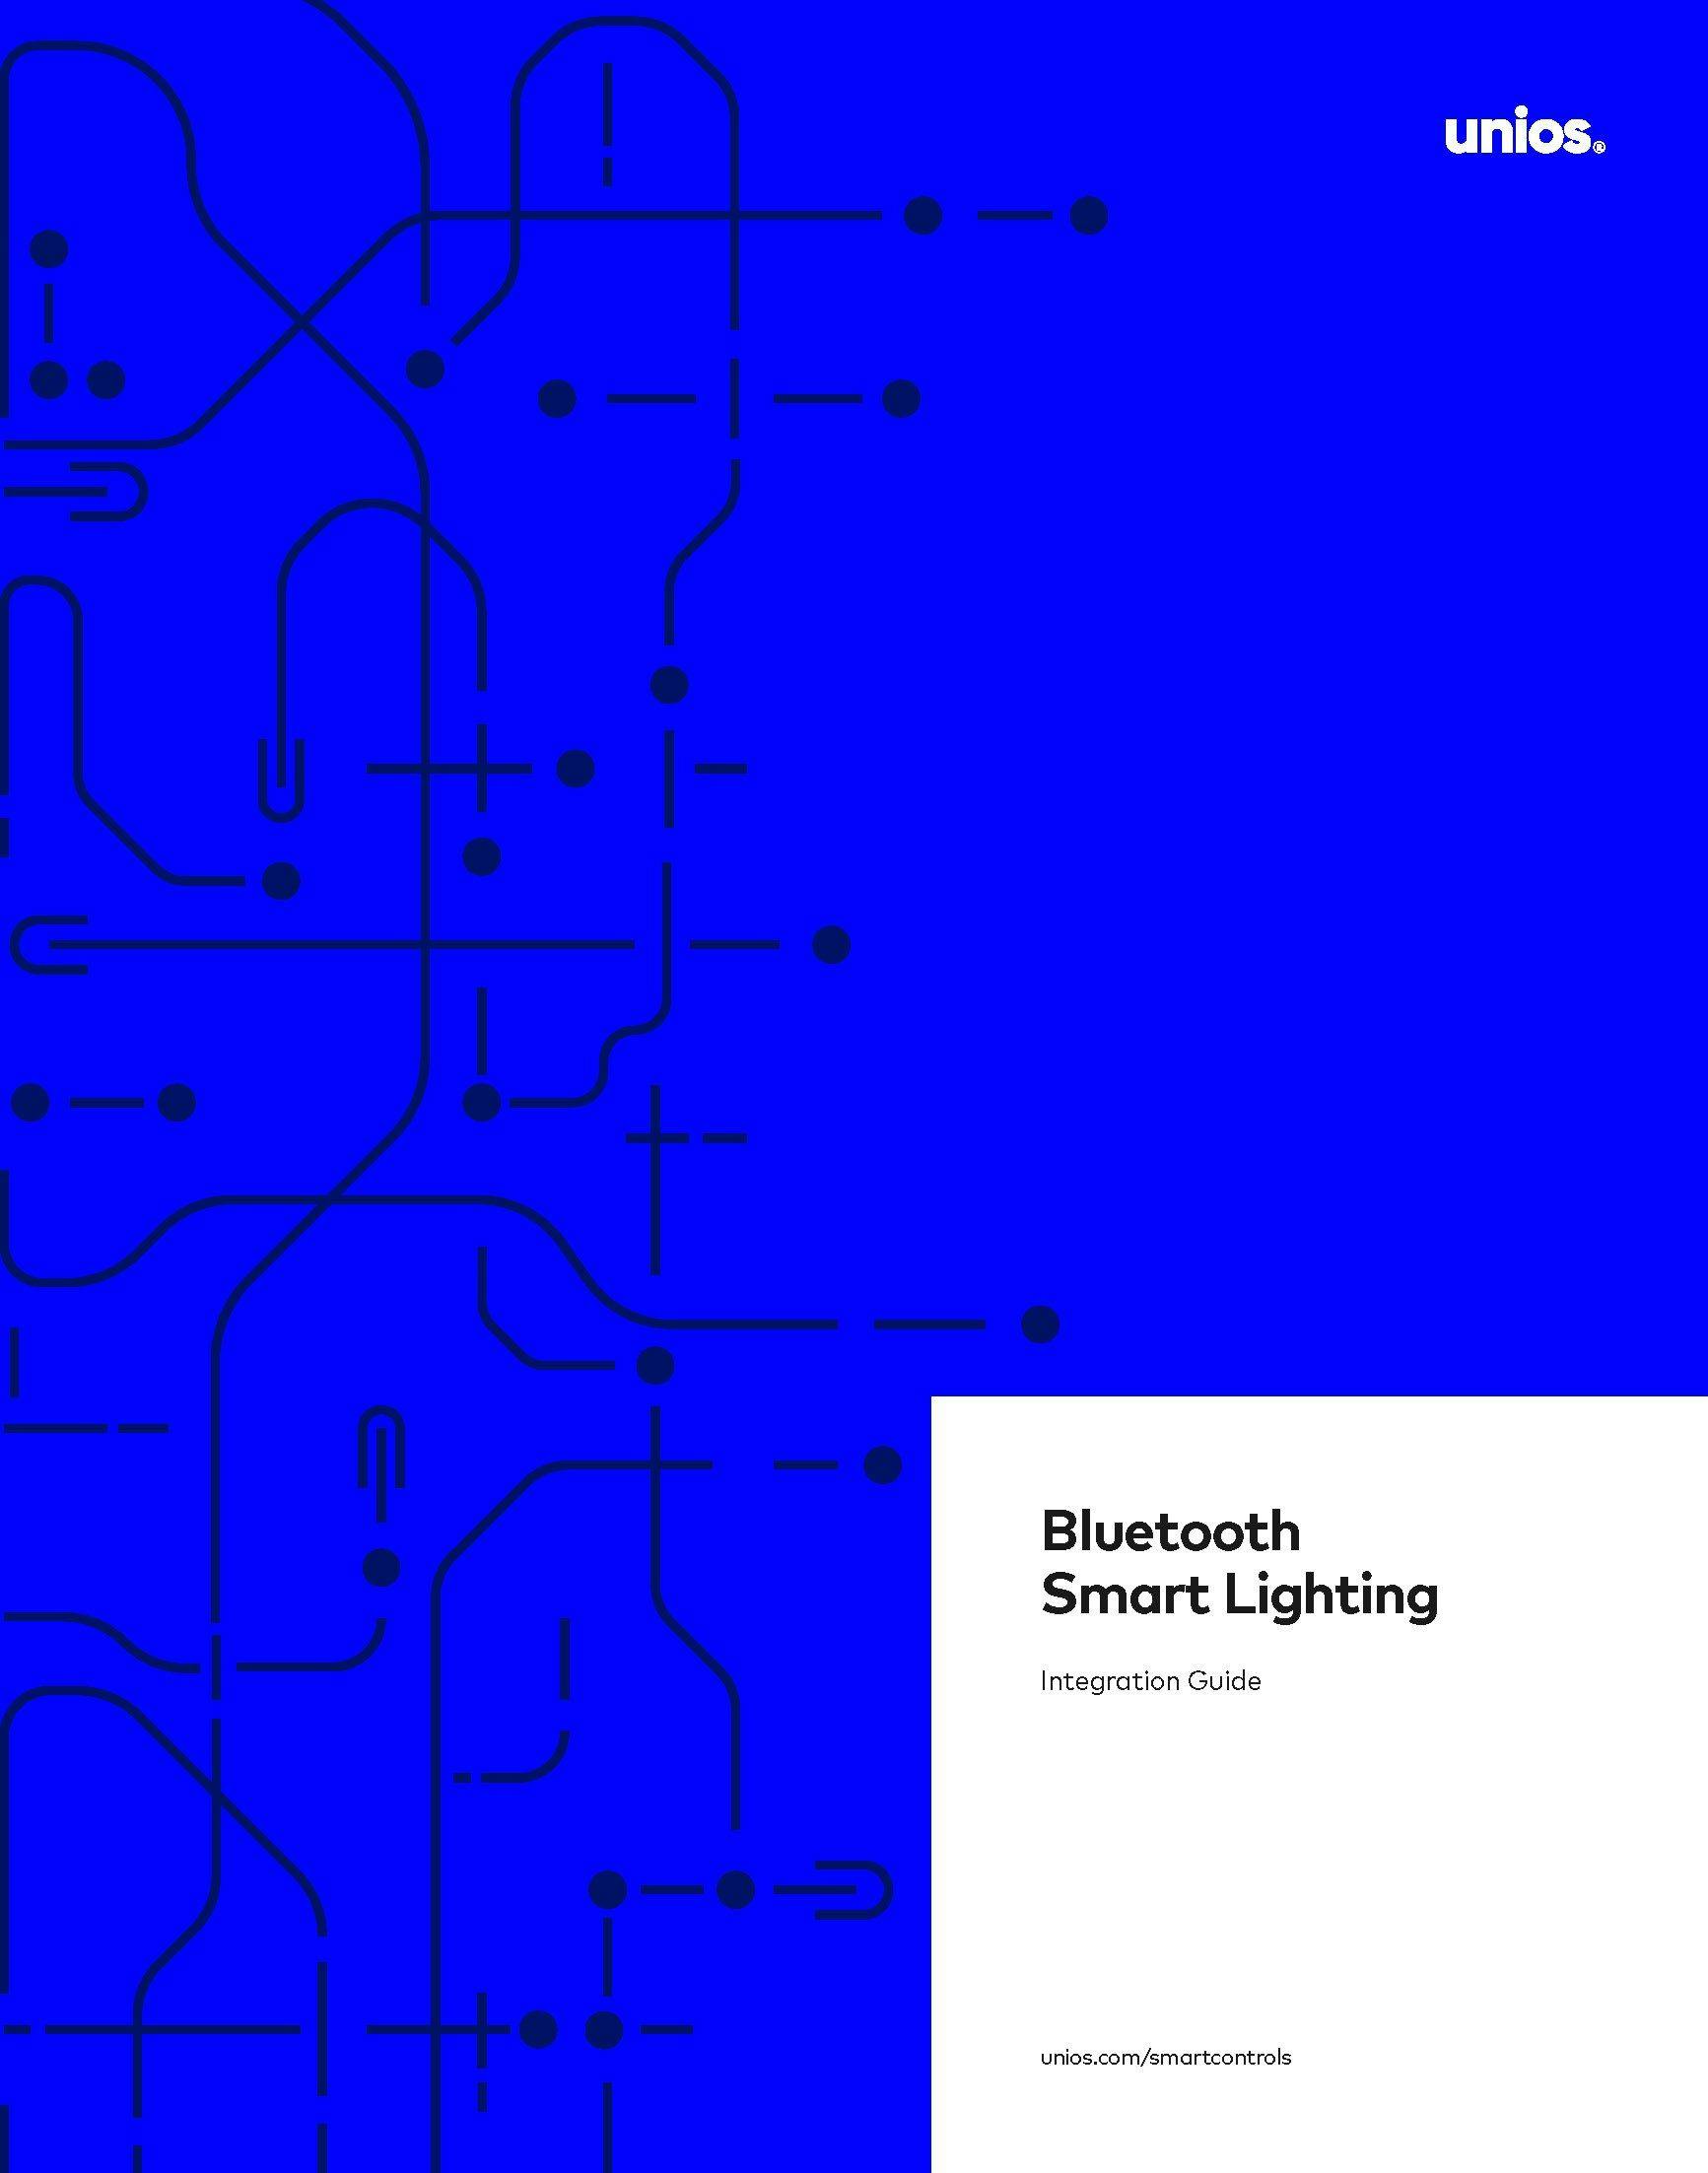 bluetooth-smart-lighting-integration-guide.jpg